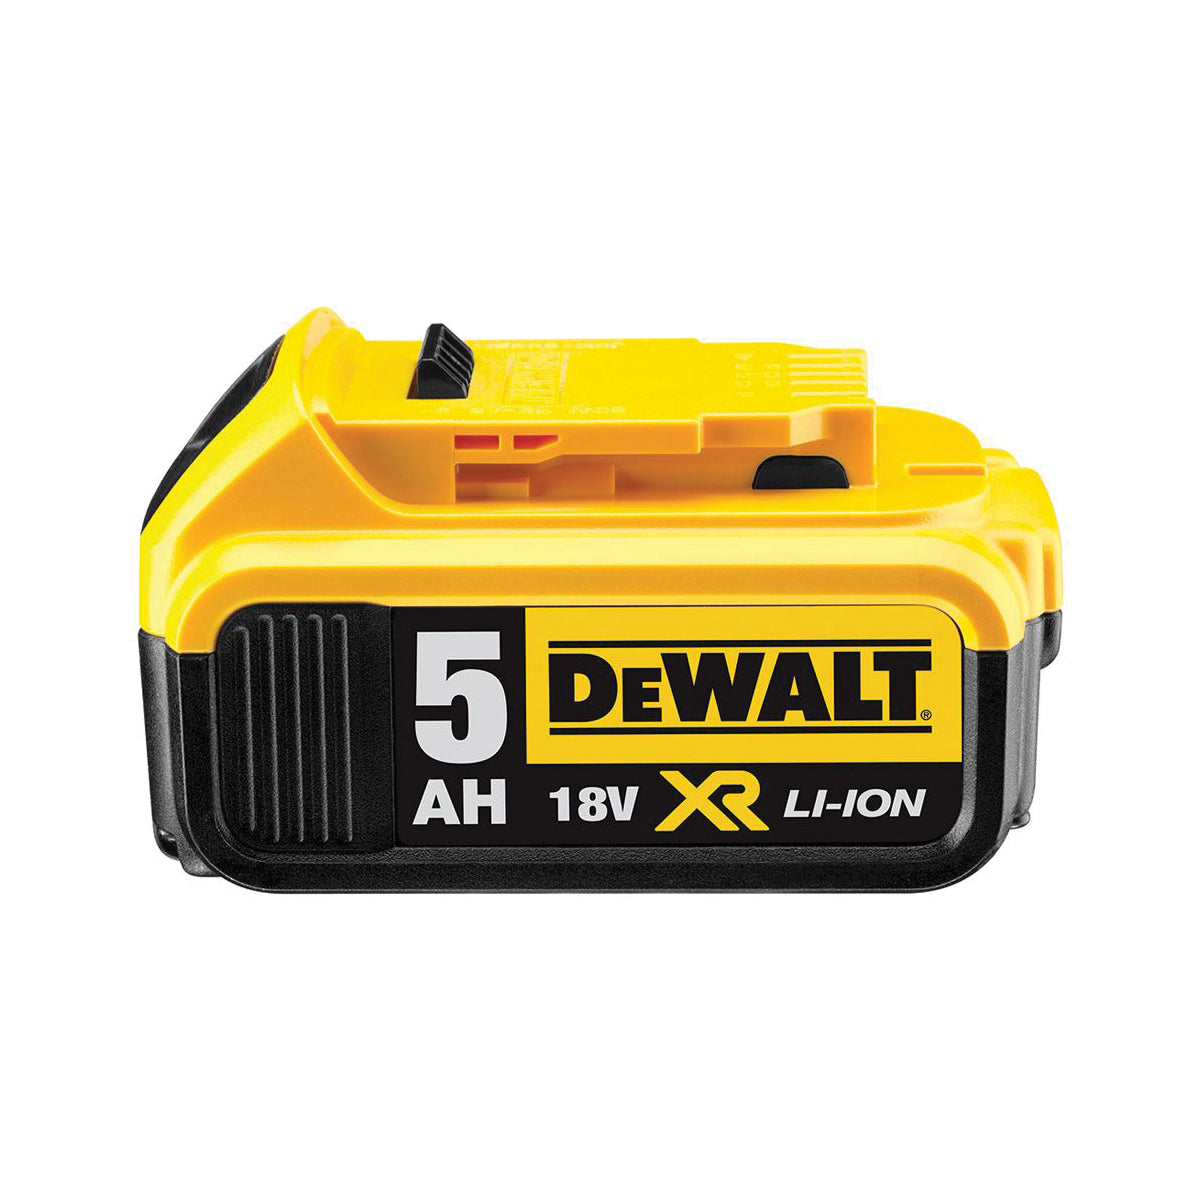 KIT di 3 batterie XR 18V 5Ah + caricabatteria - DeWALT